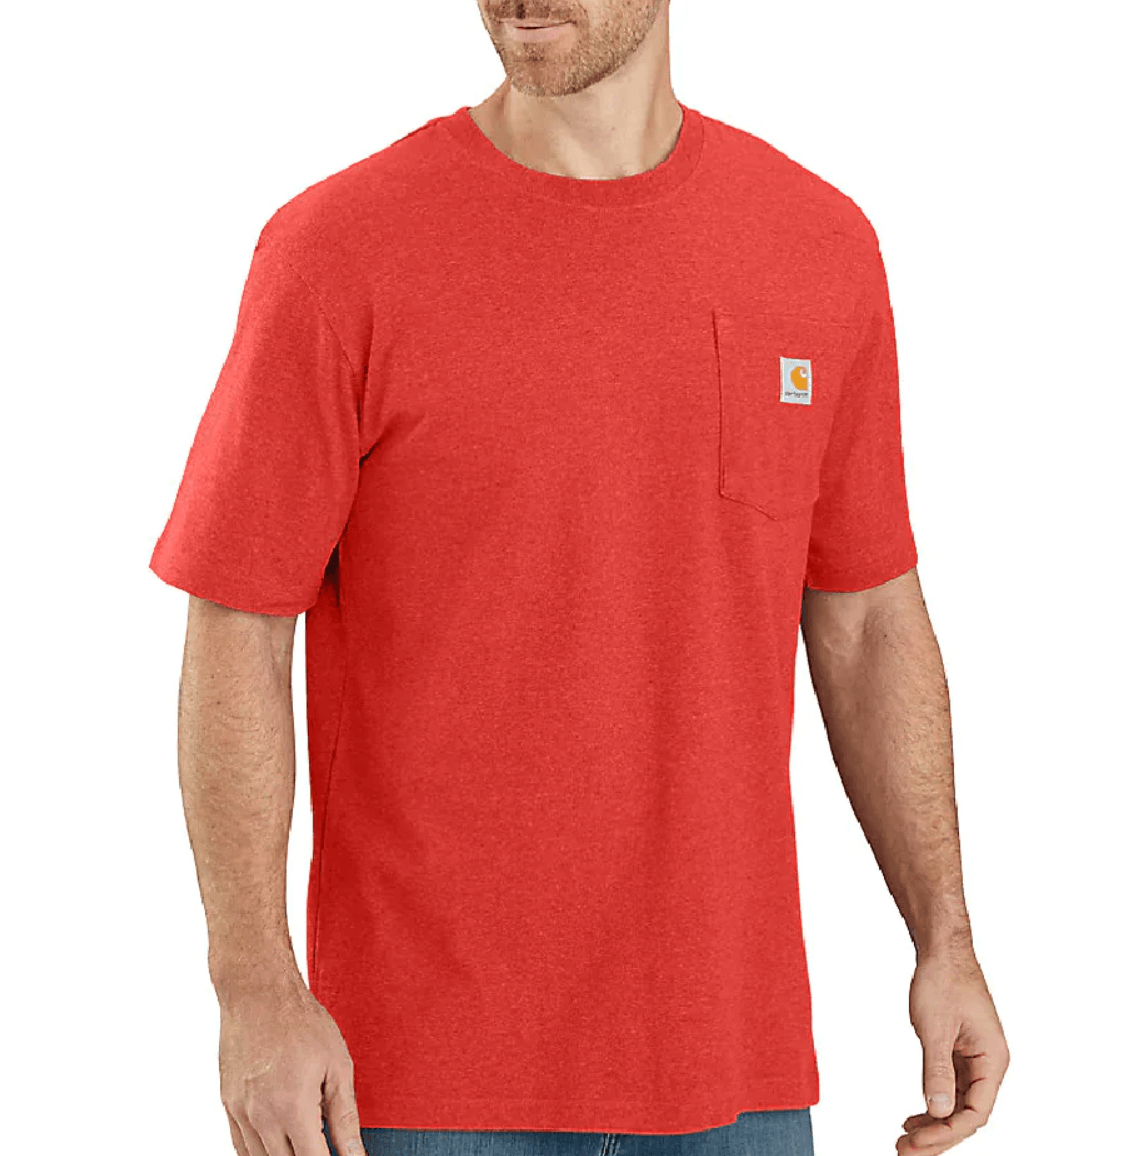 K87 - Loose fit heavyweight short-sleeve pocket t-shirt  - Fire Red Heather